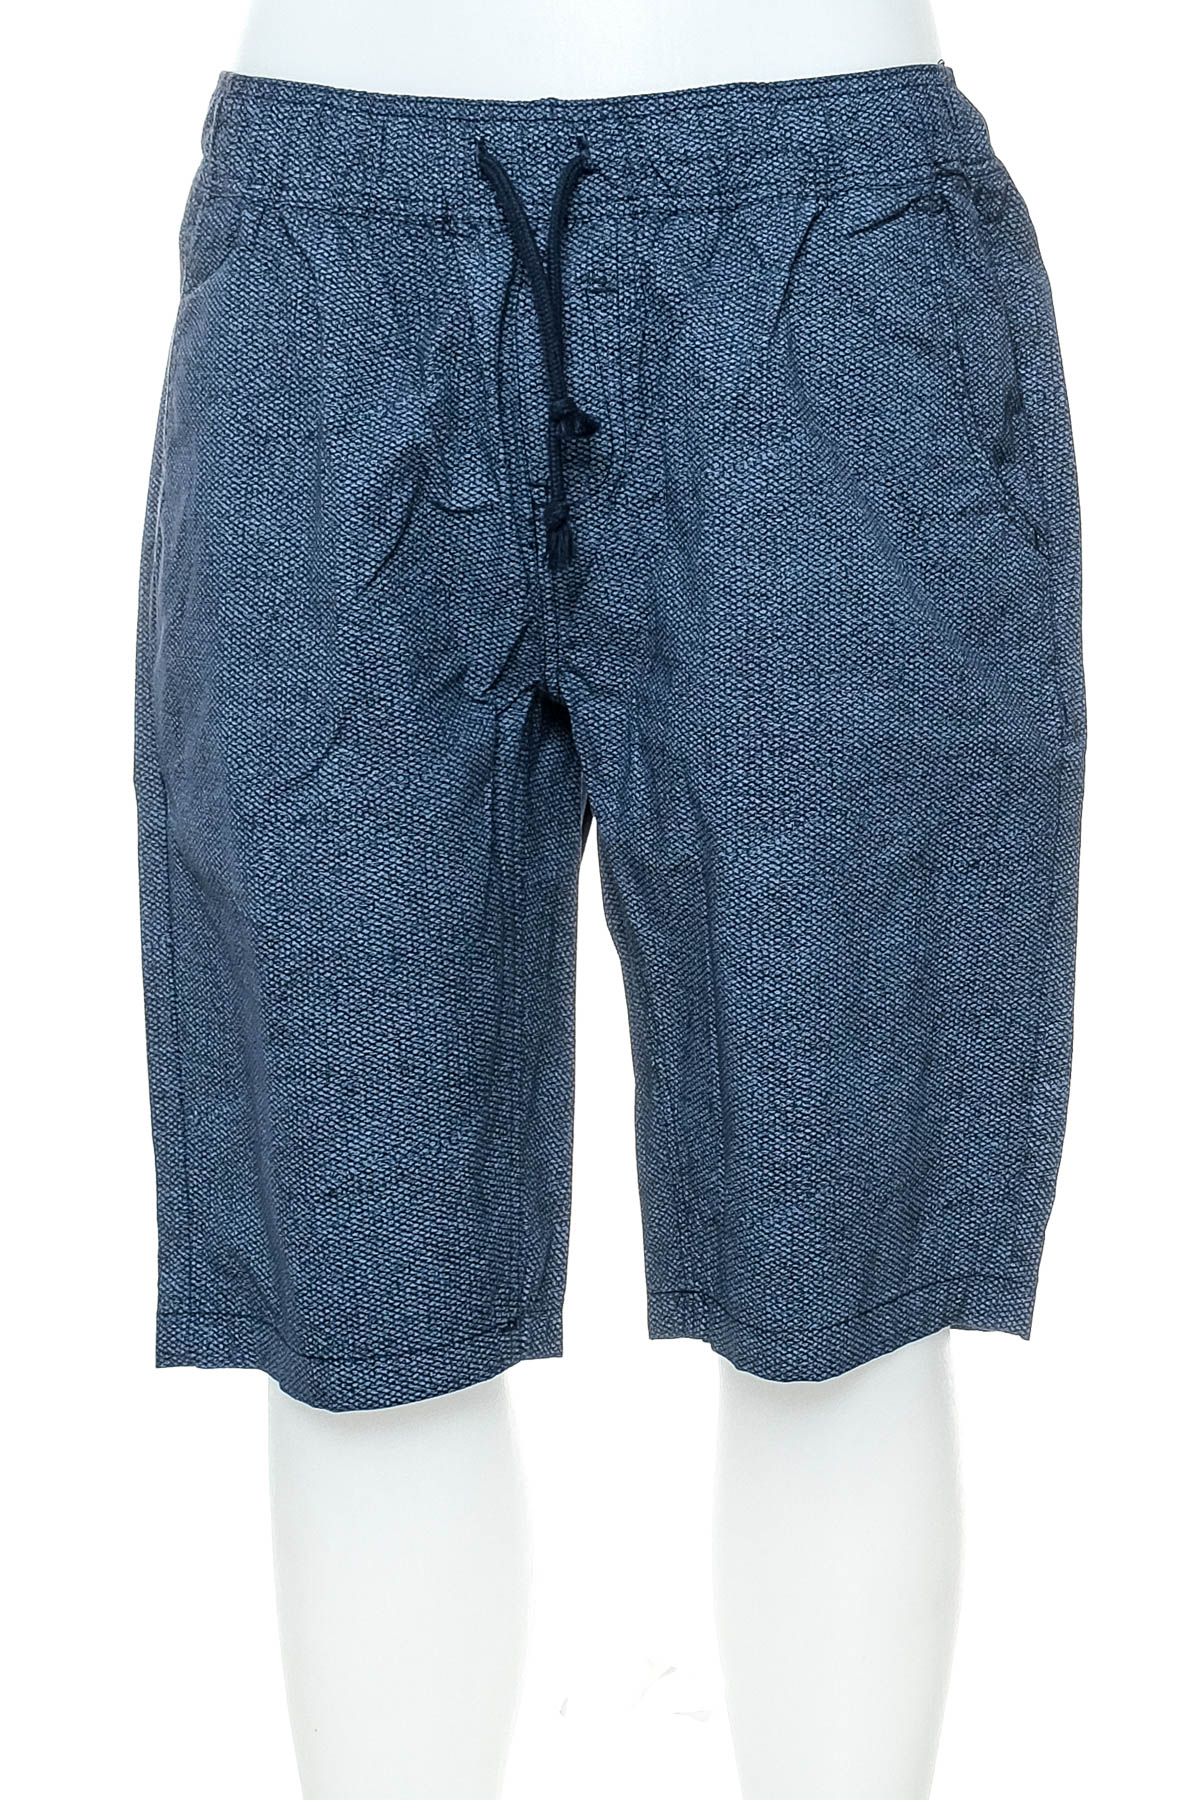 Pantaloni scurți bărbați - Denim 1982 - 0